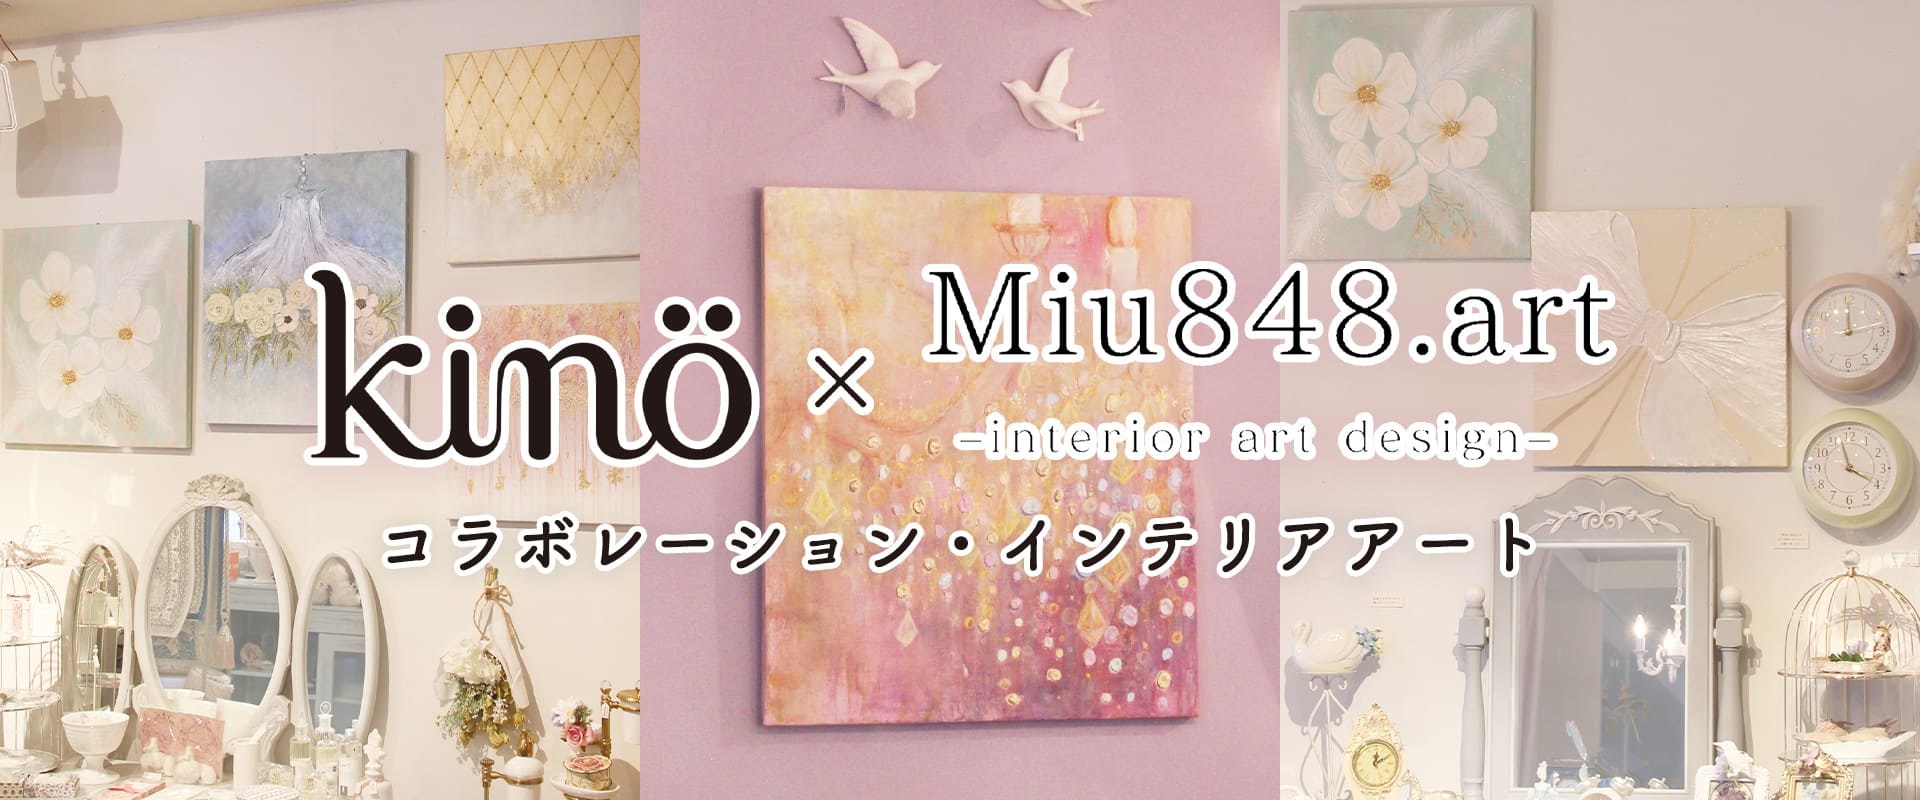 kino × Miu848.art コラボアート - インテリアショップkino